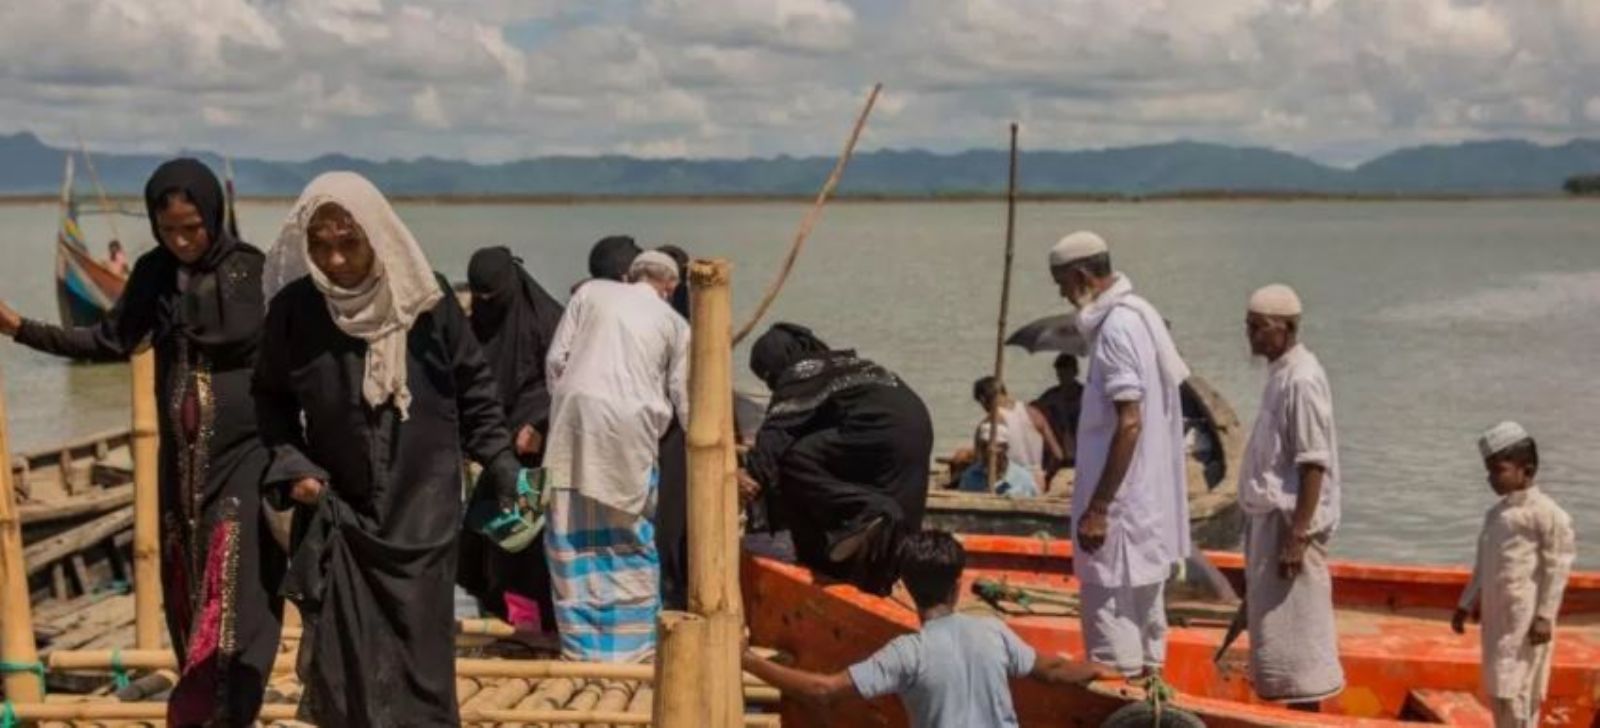 Israel accuses Myanmar Rohingya of committing war crimes